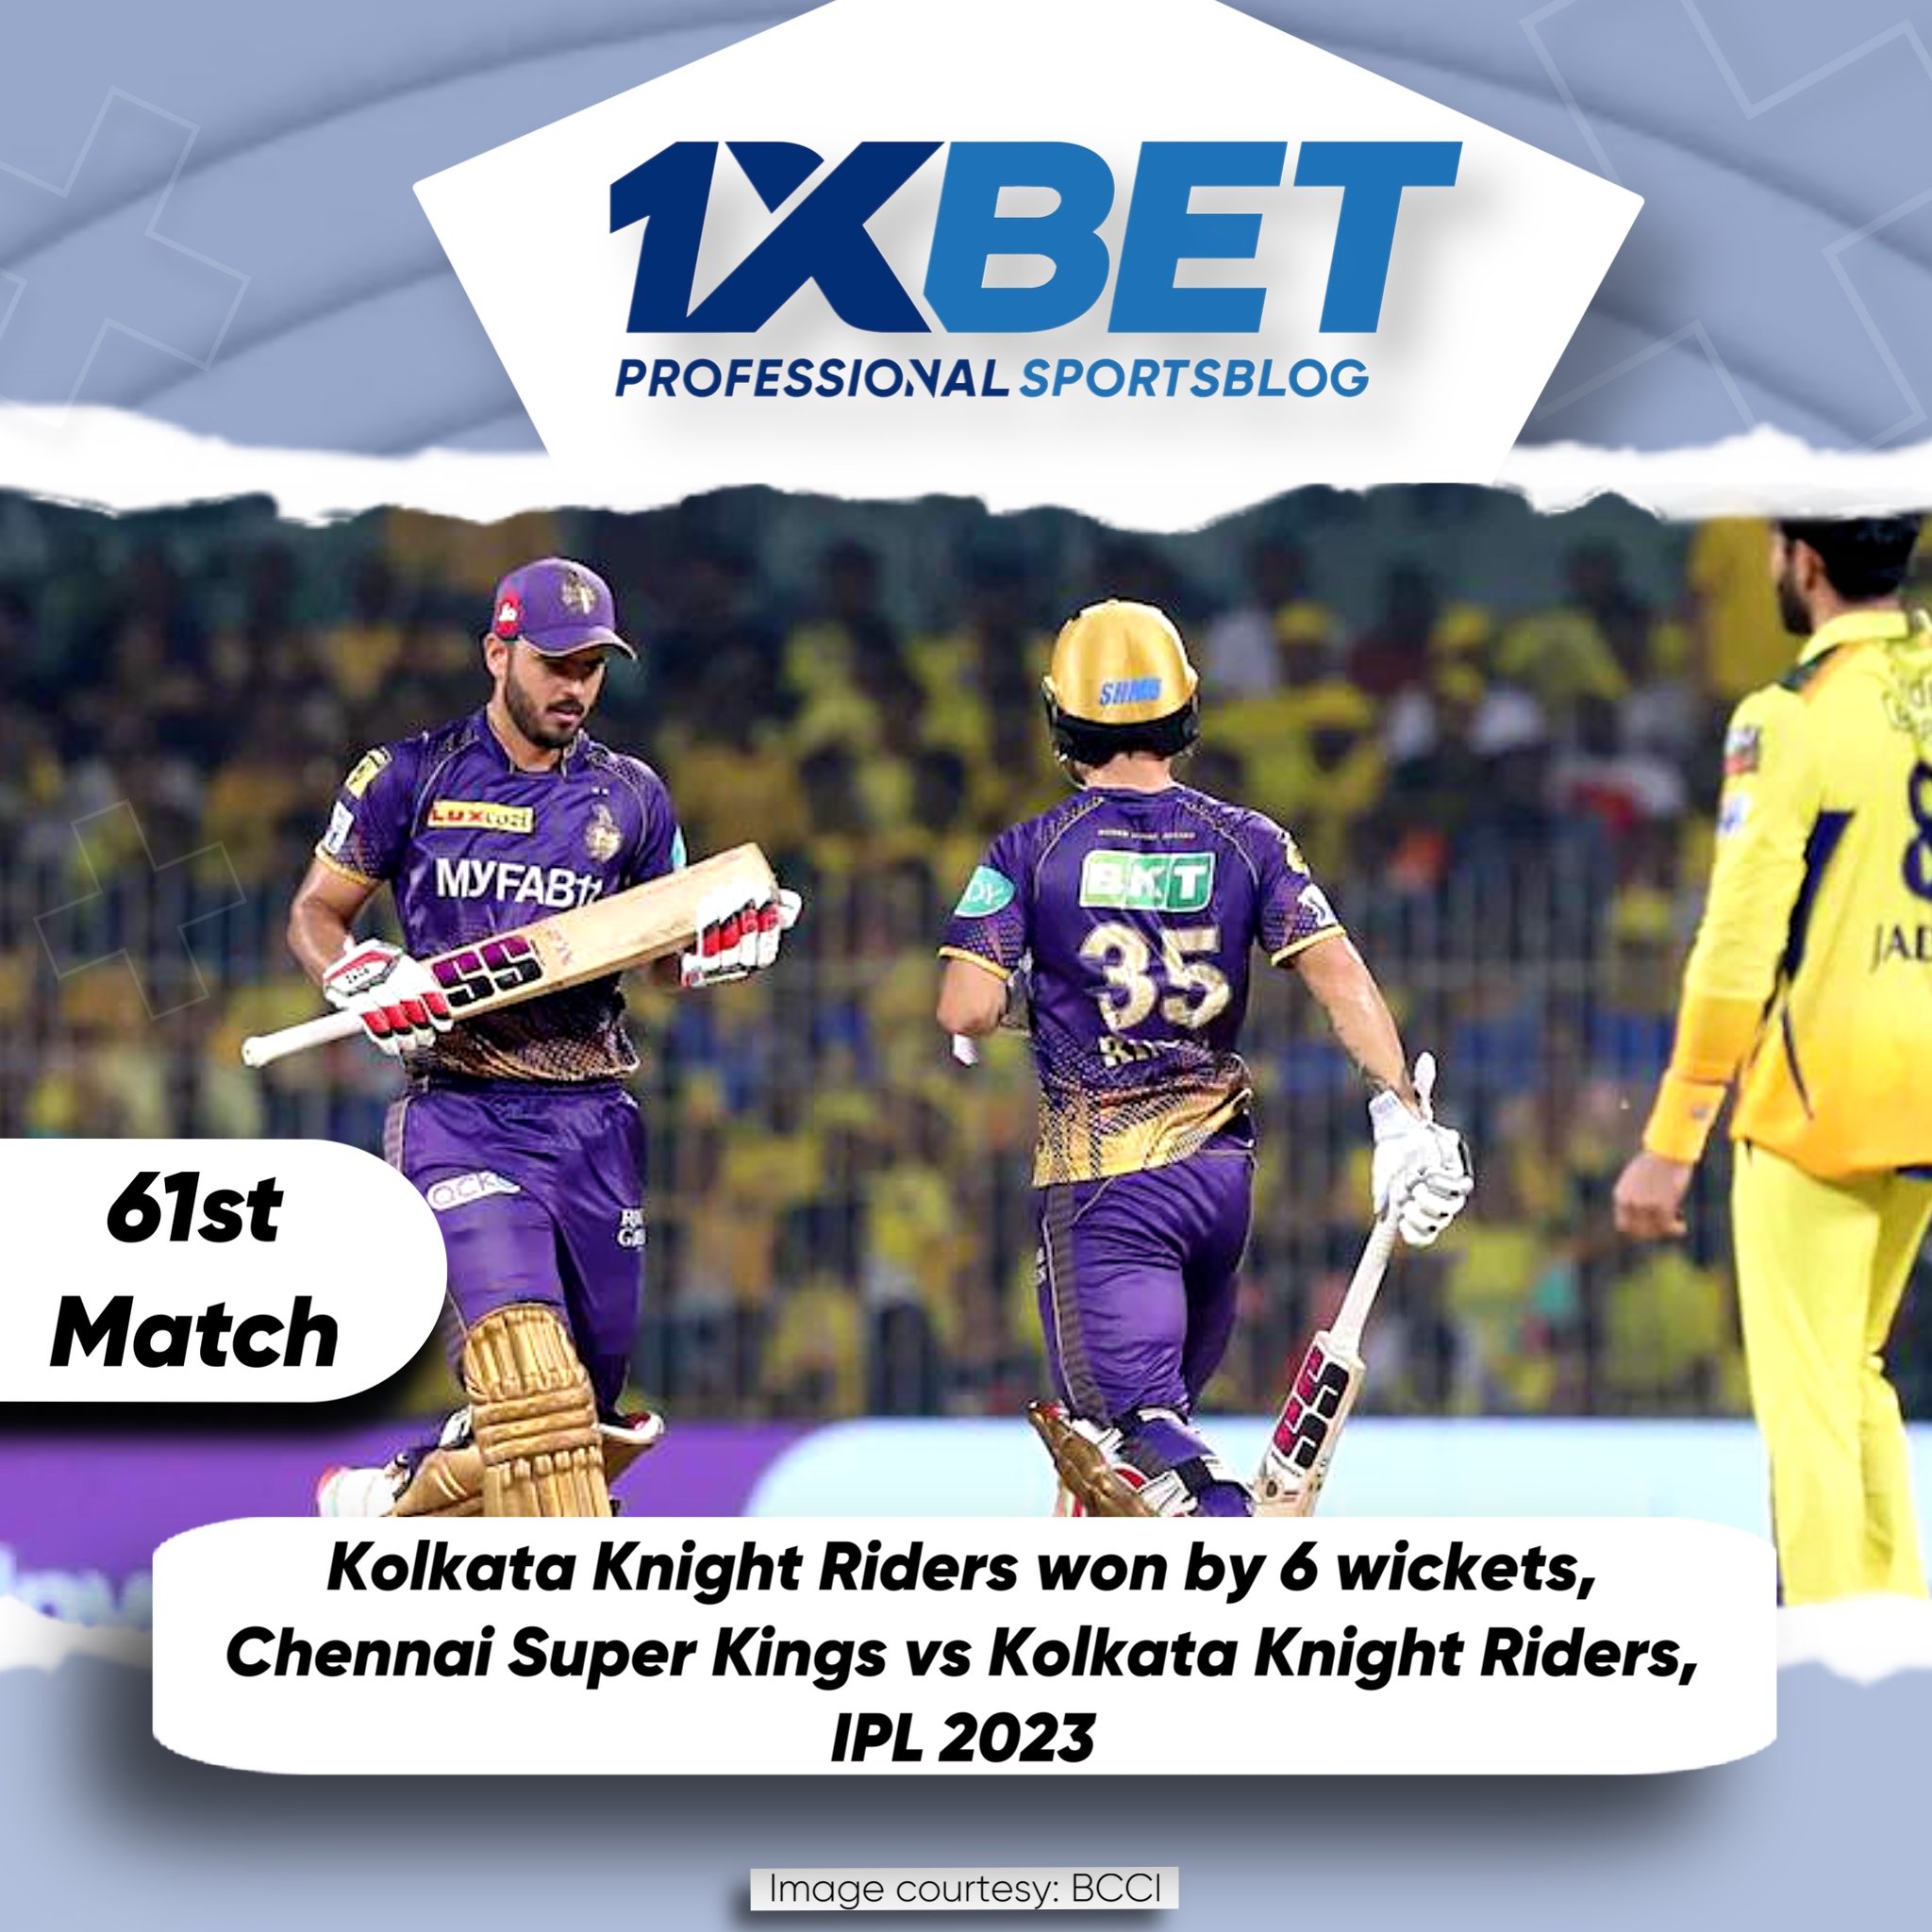 Kolkata Knight Riders won by 6 wickets